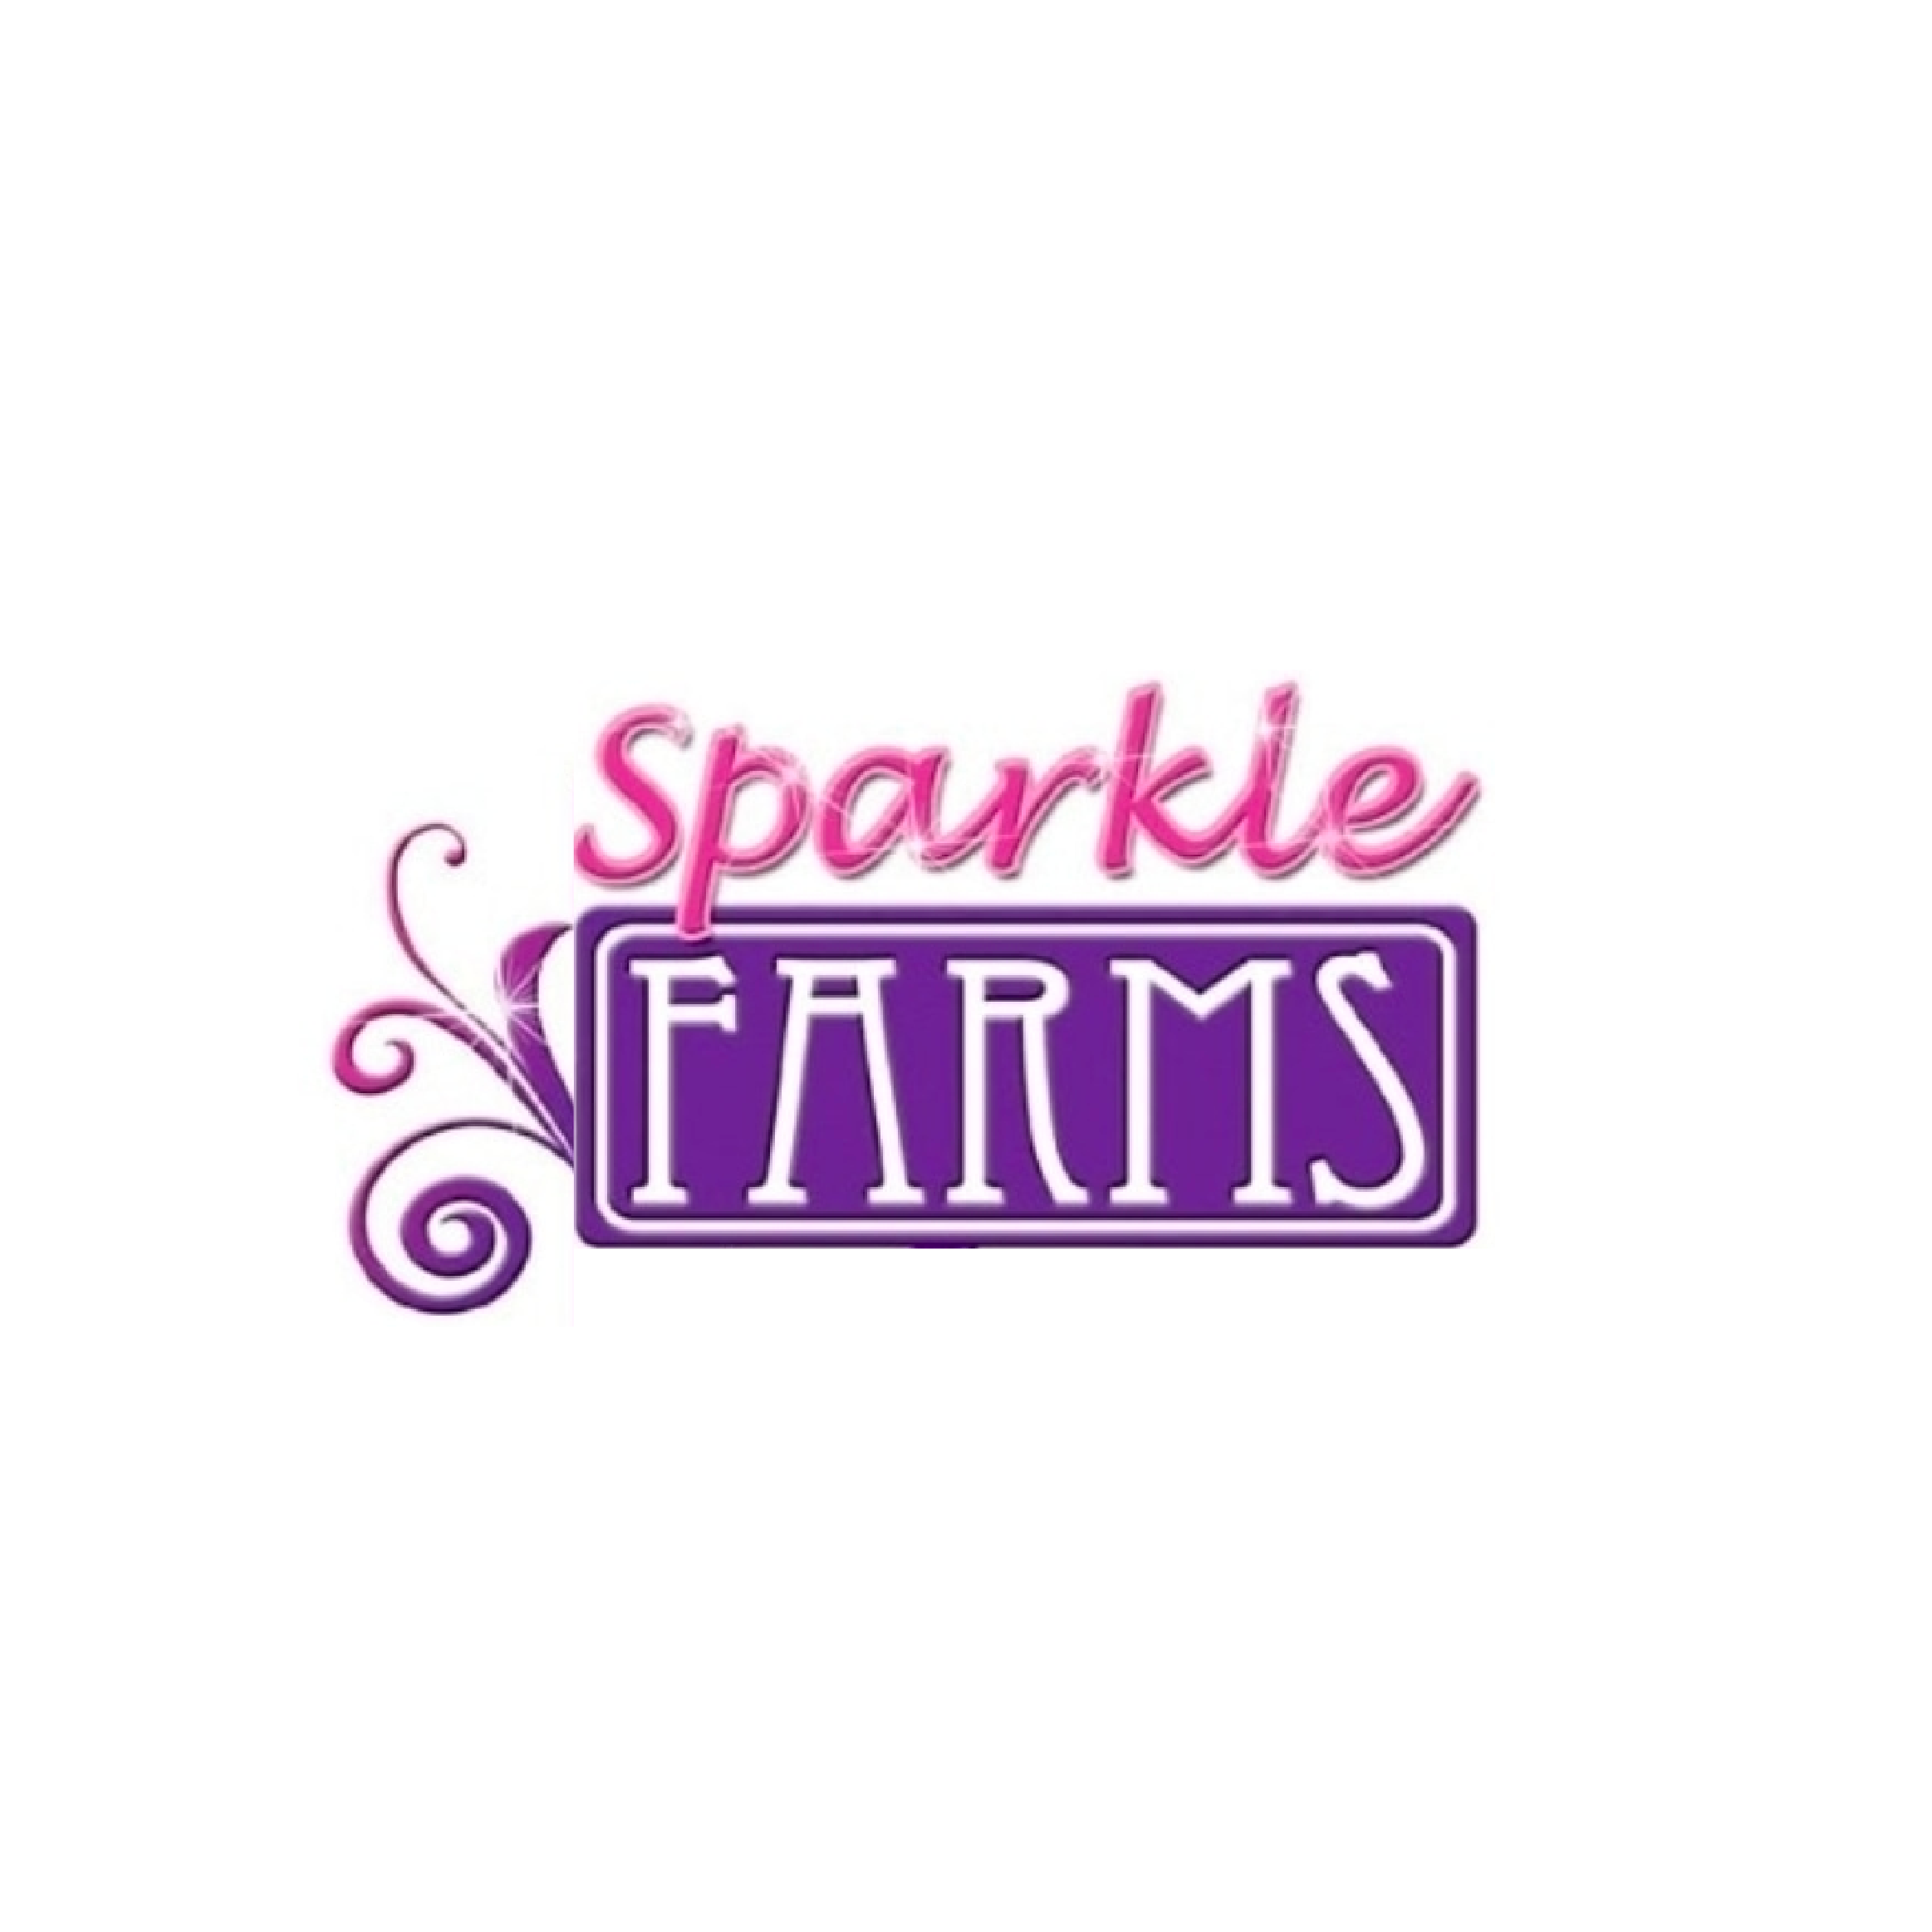 Old sparkle farms logo